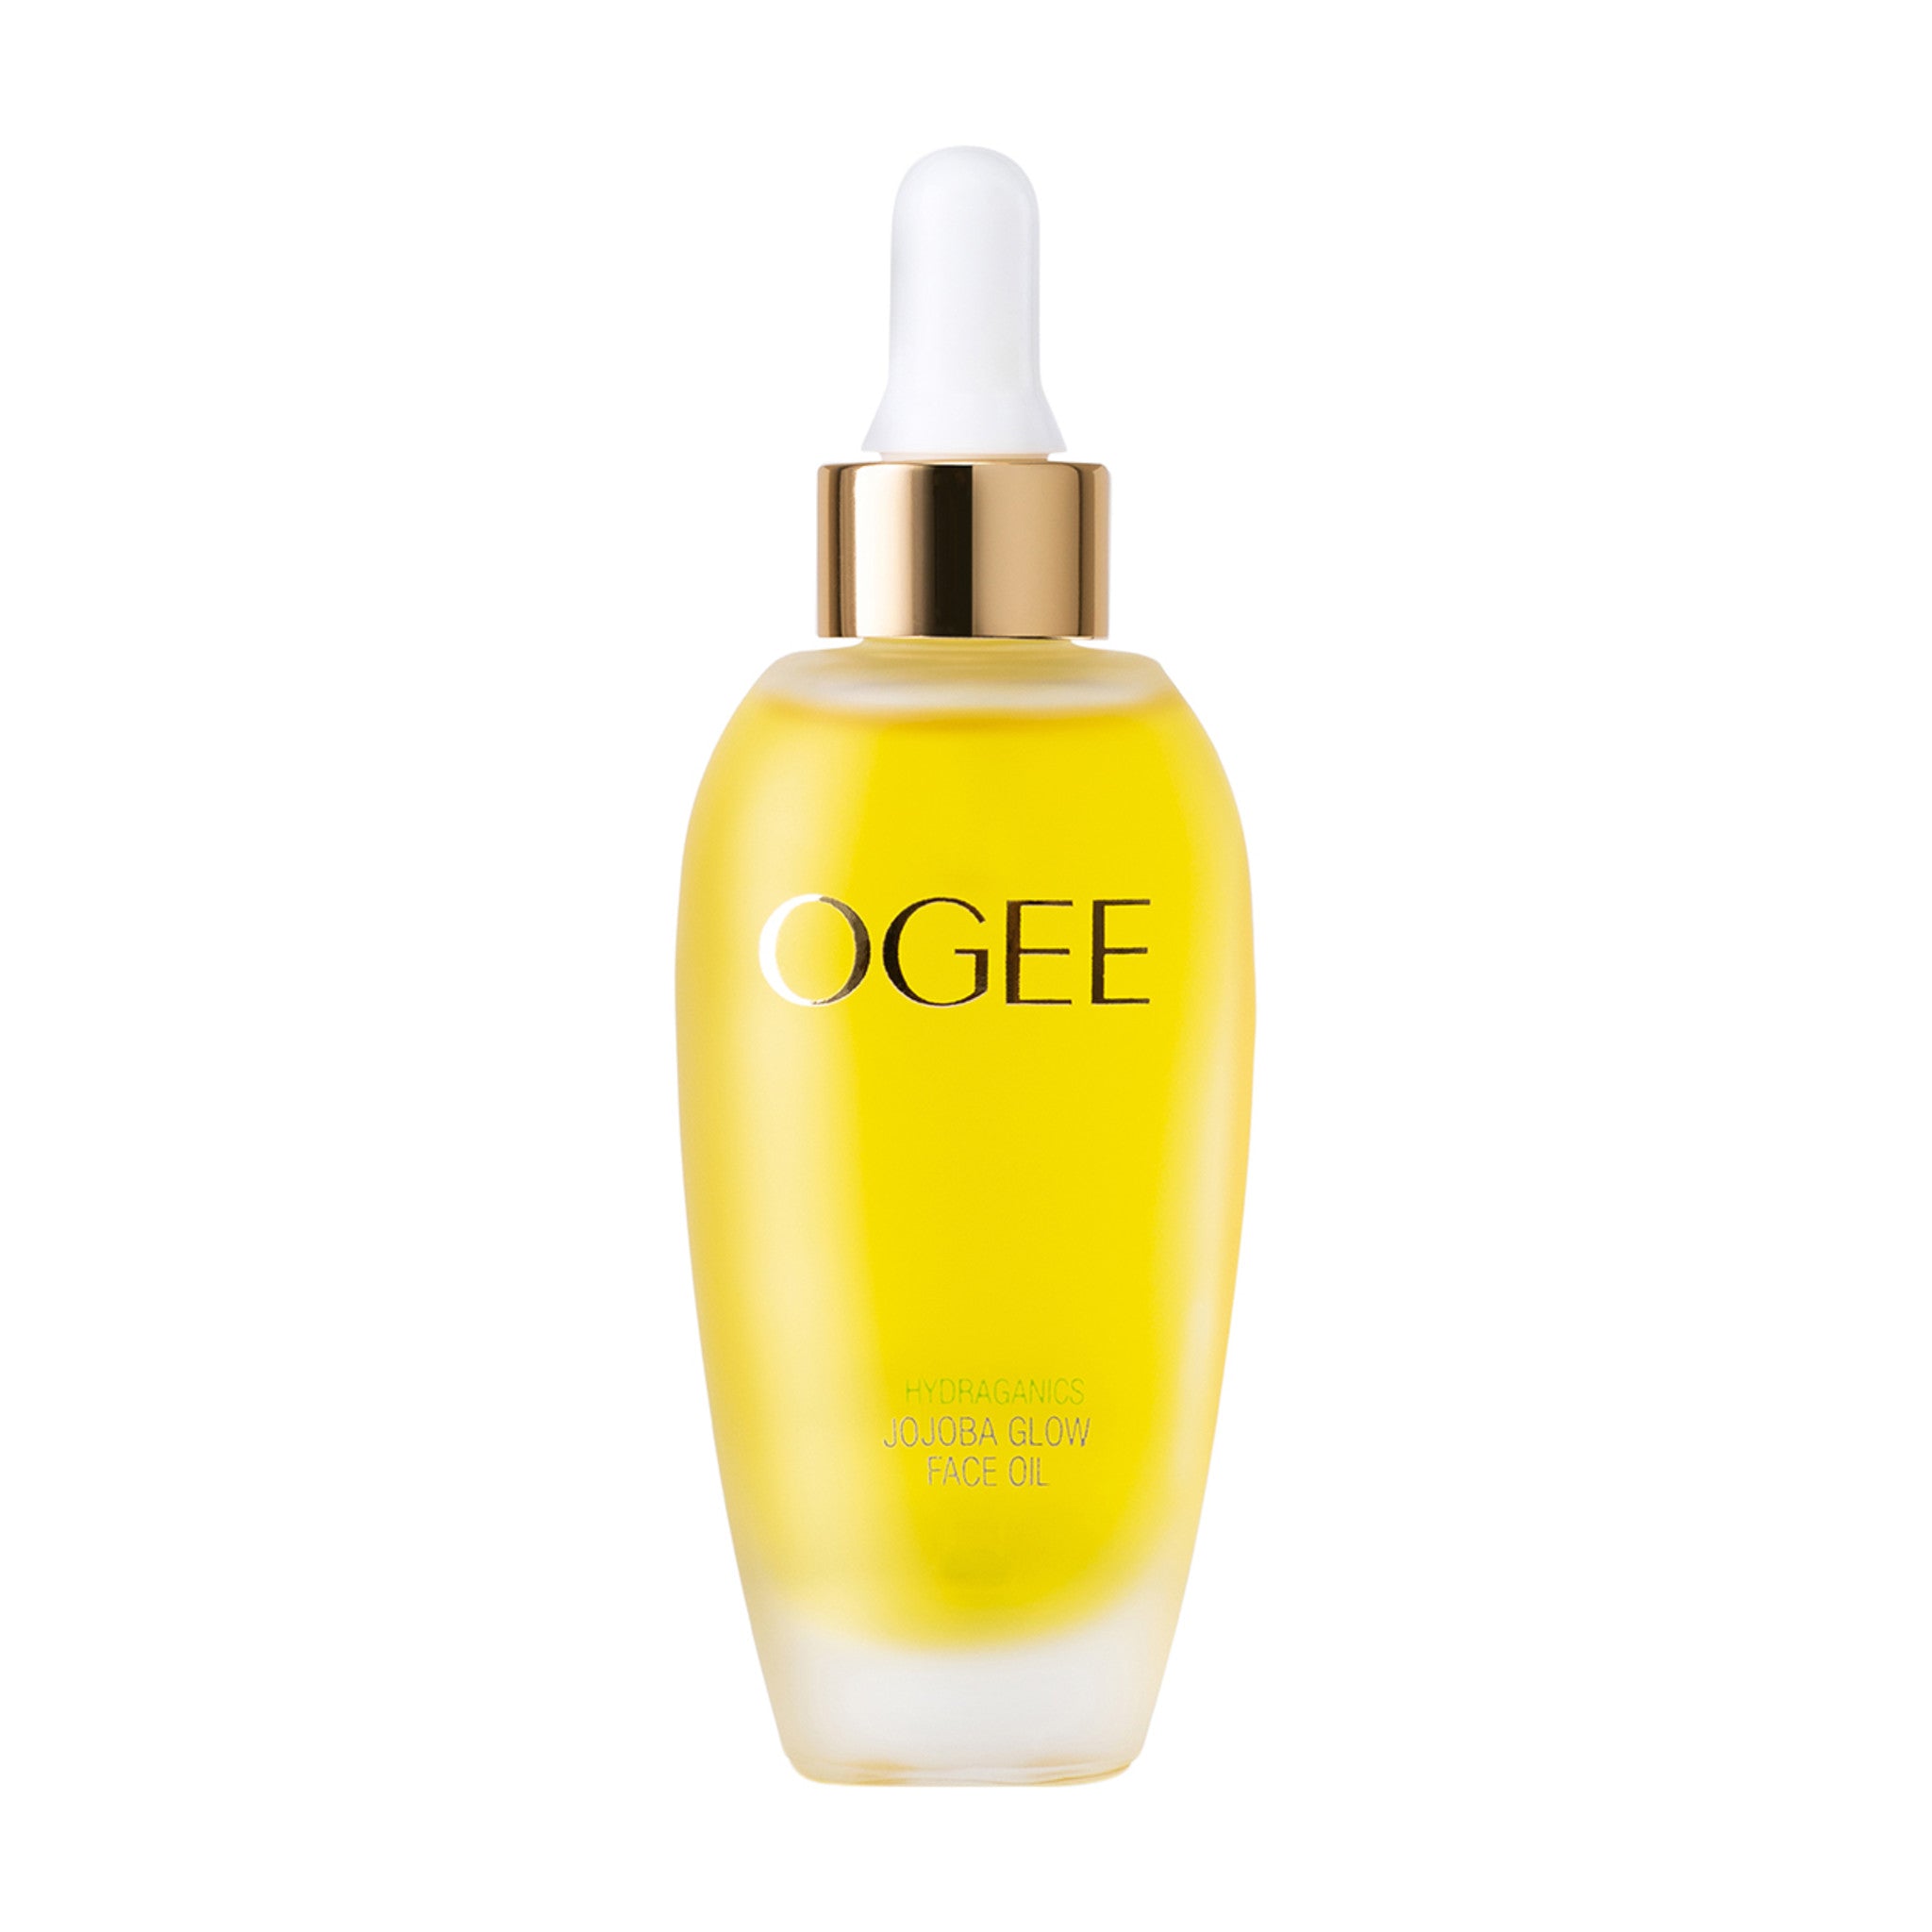 Ogee Jojoba Glow Face Oil main image.